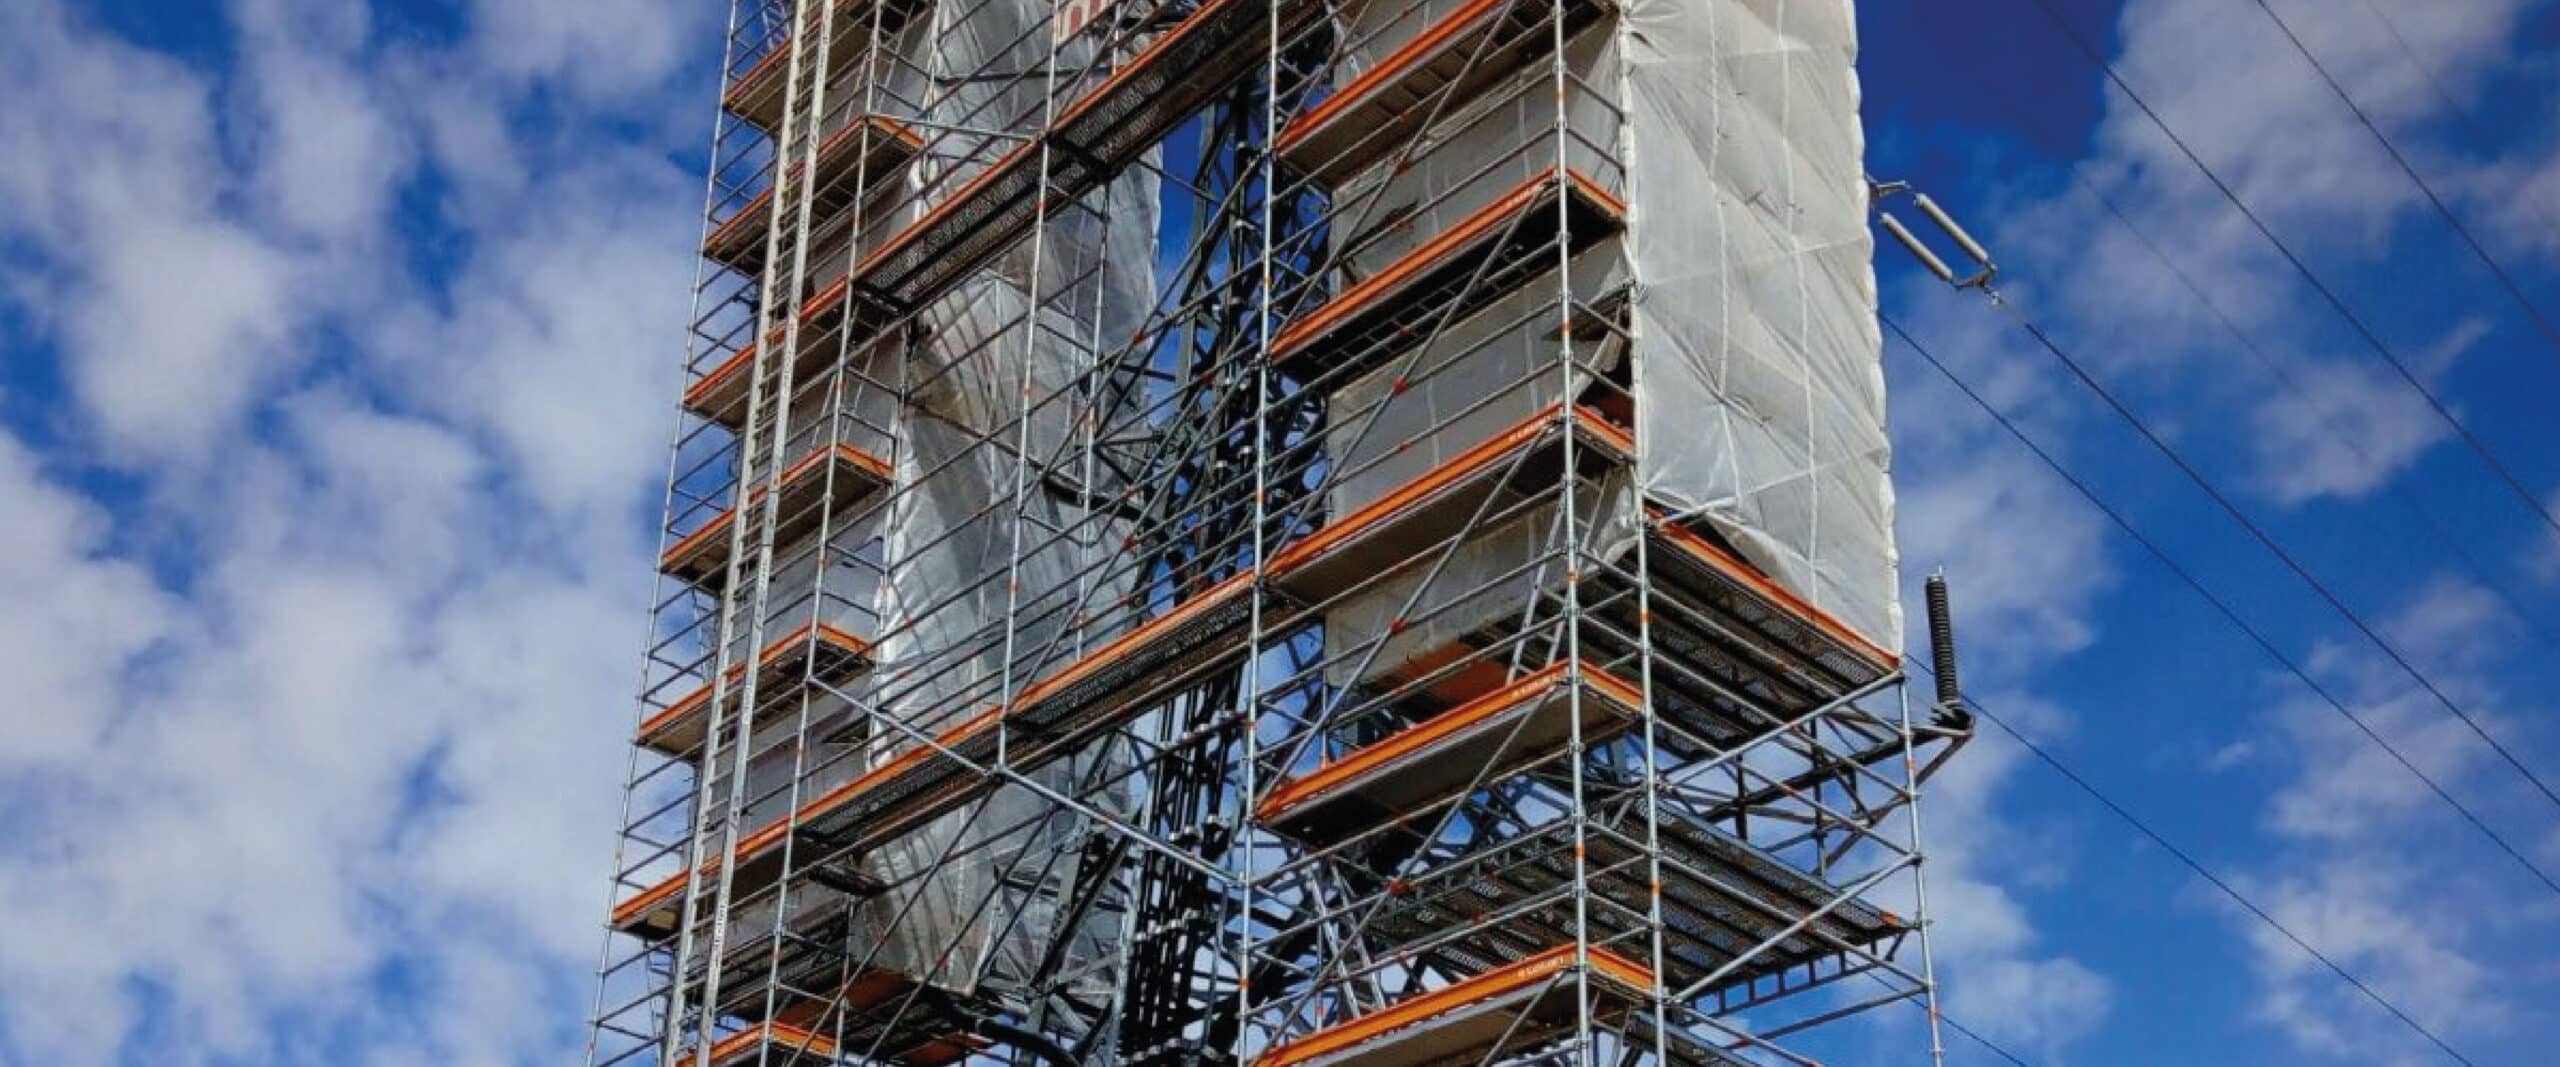 scaffolding-industry_energy